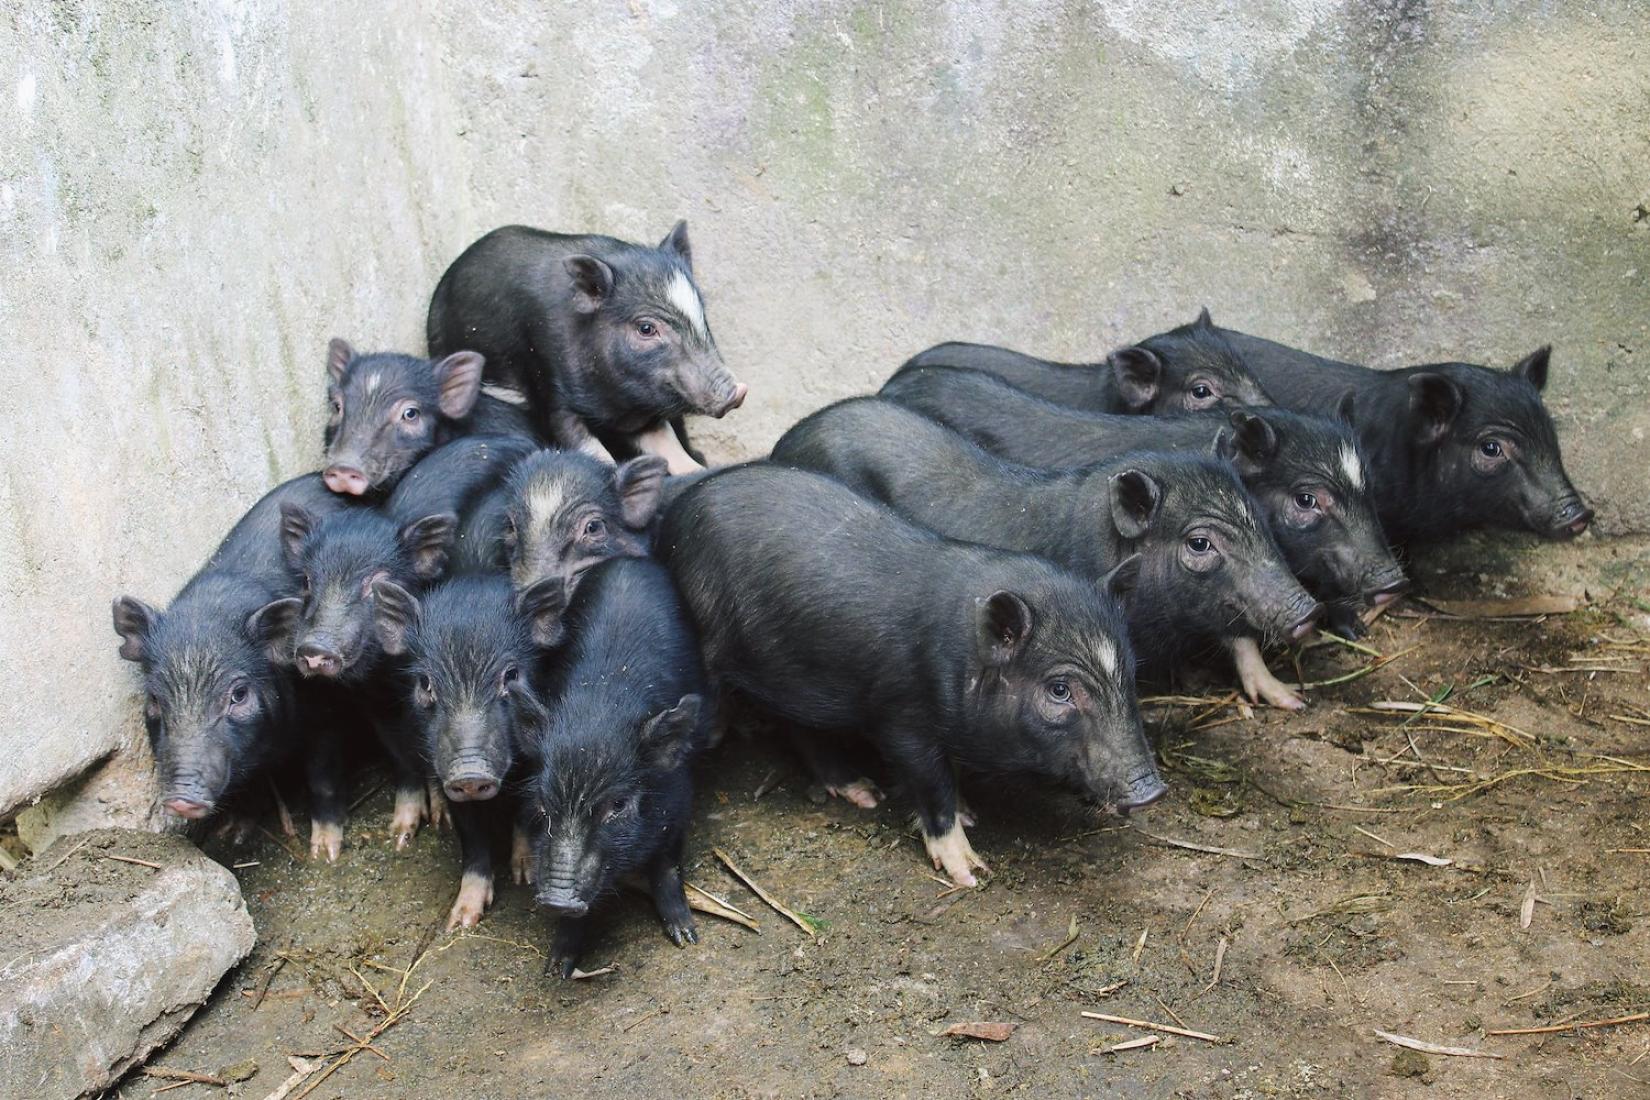 A group of black piglets